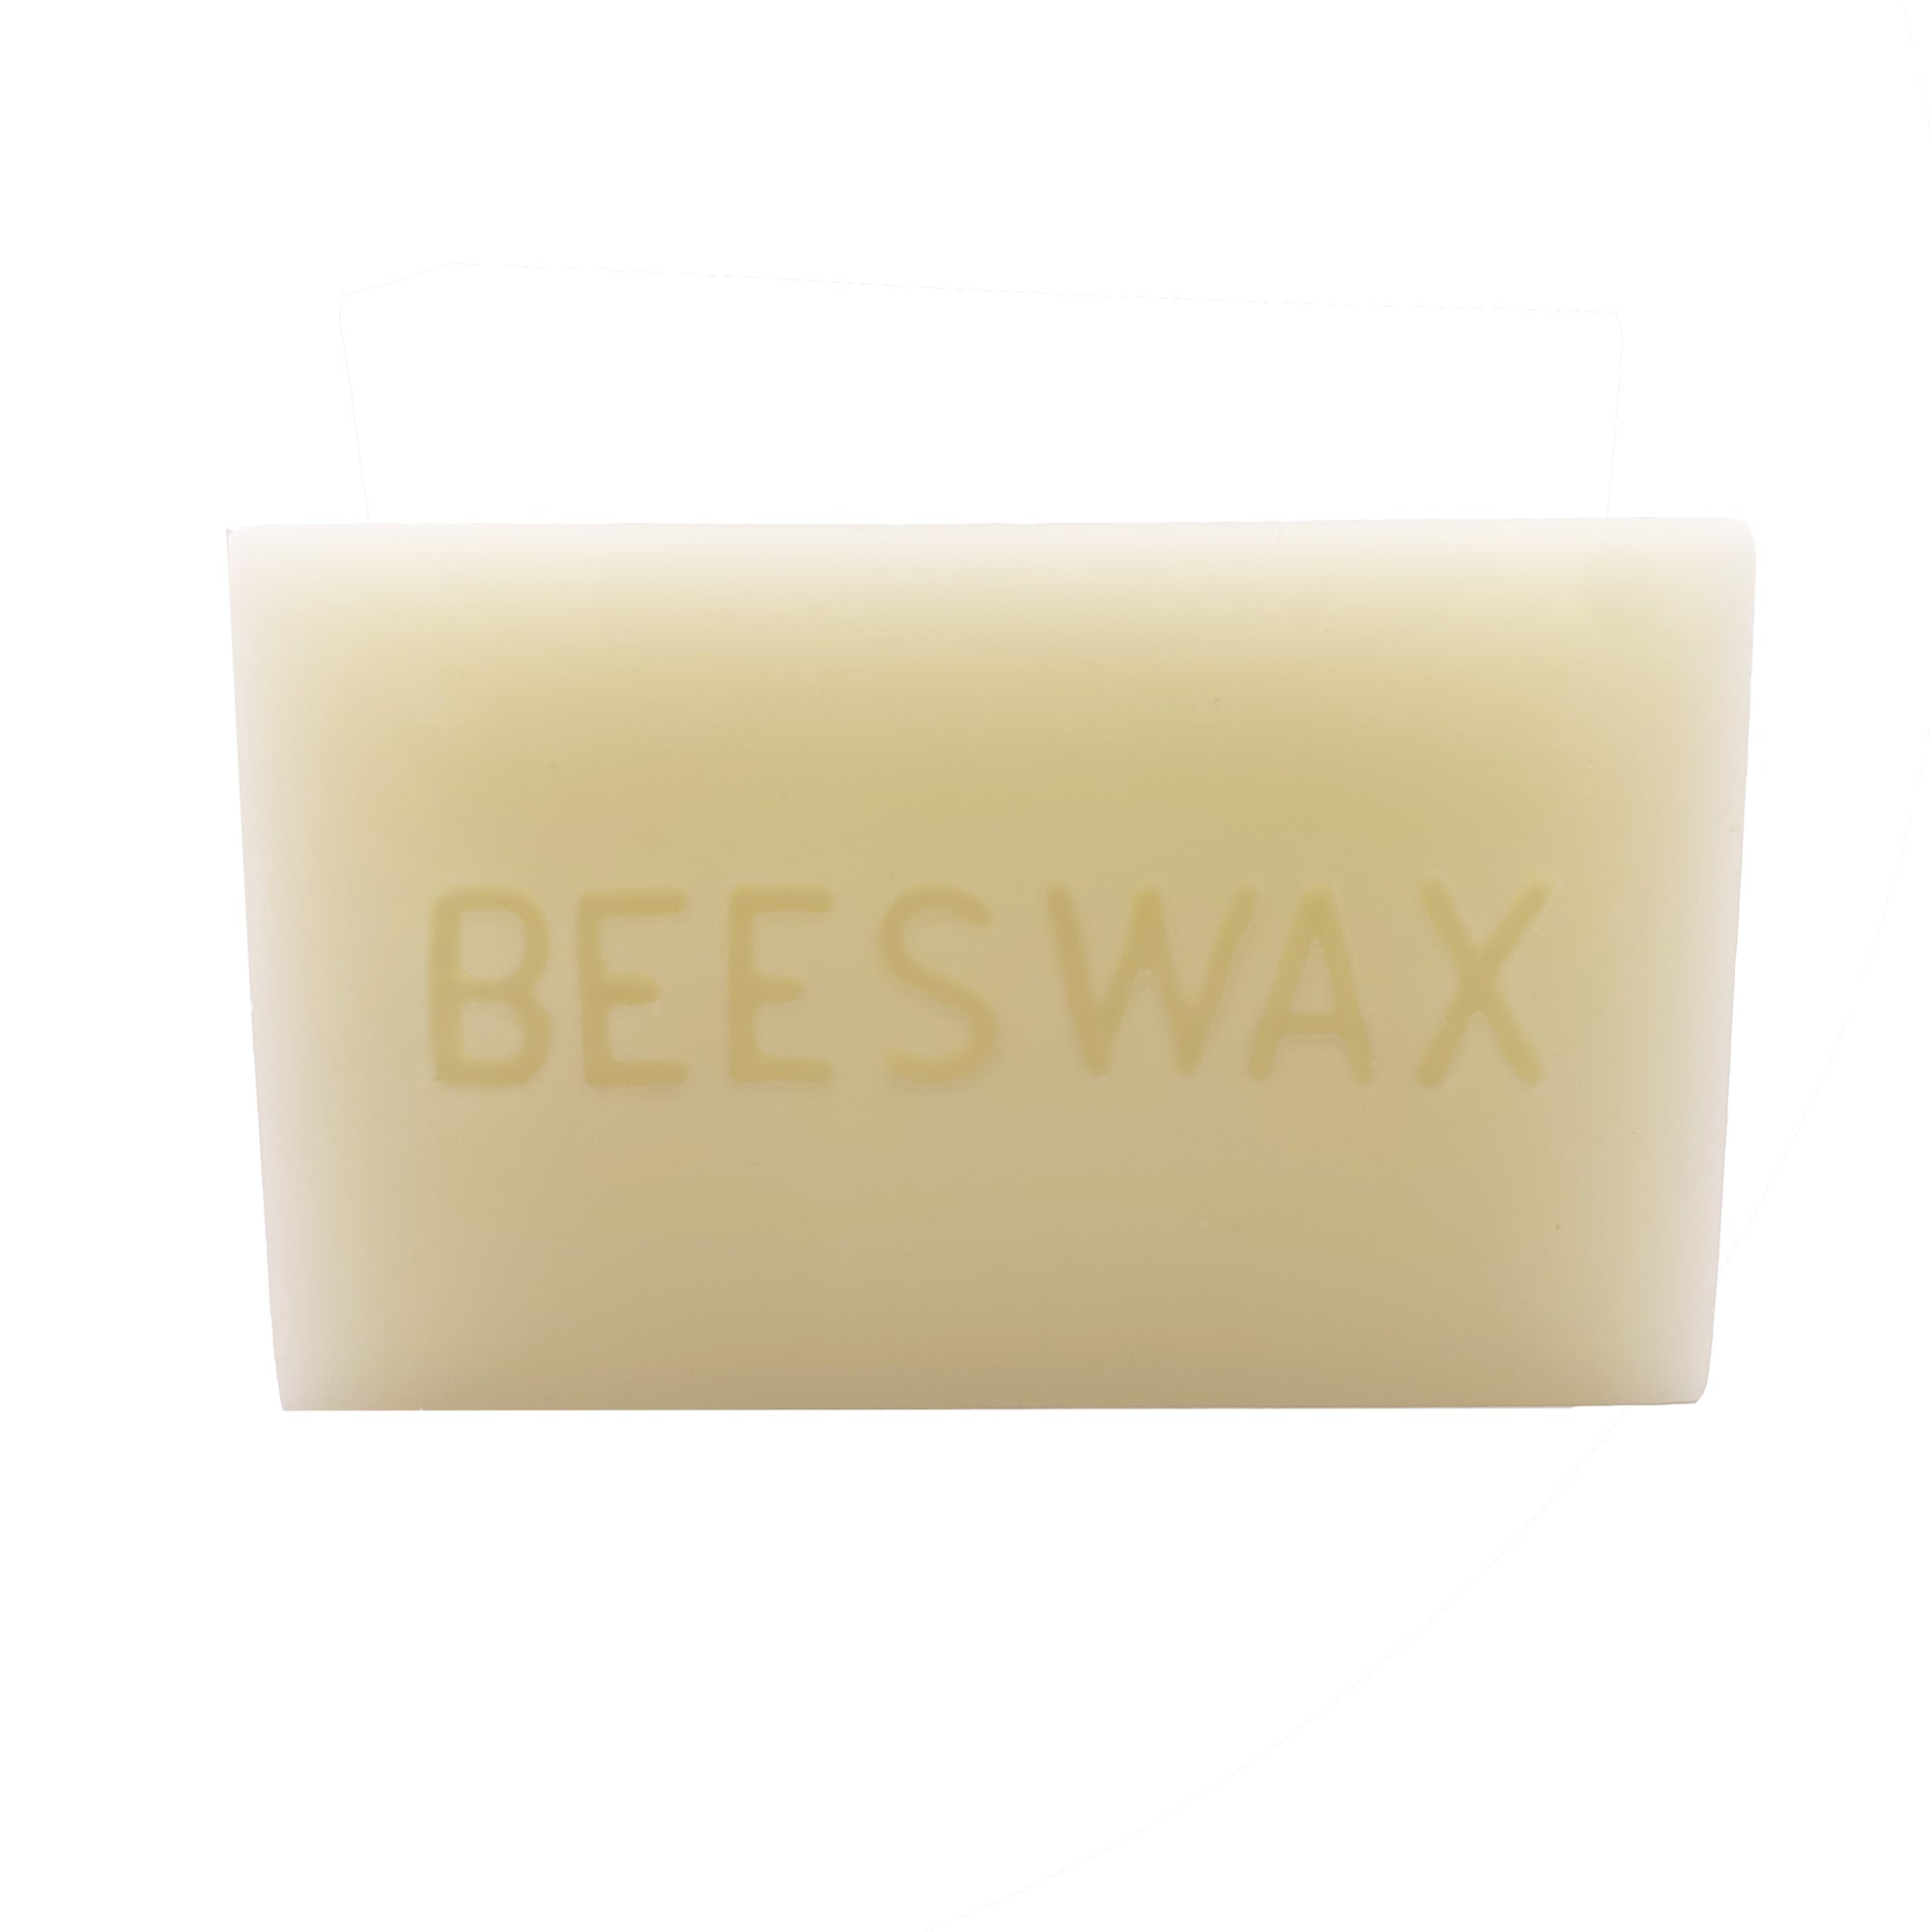 Beeswax Block - Woodlark Shop